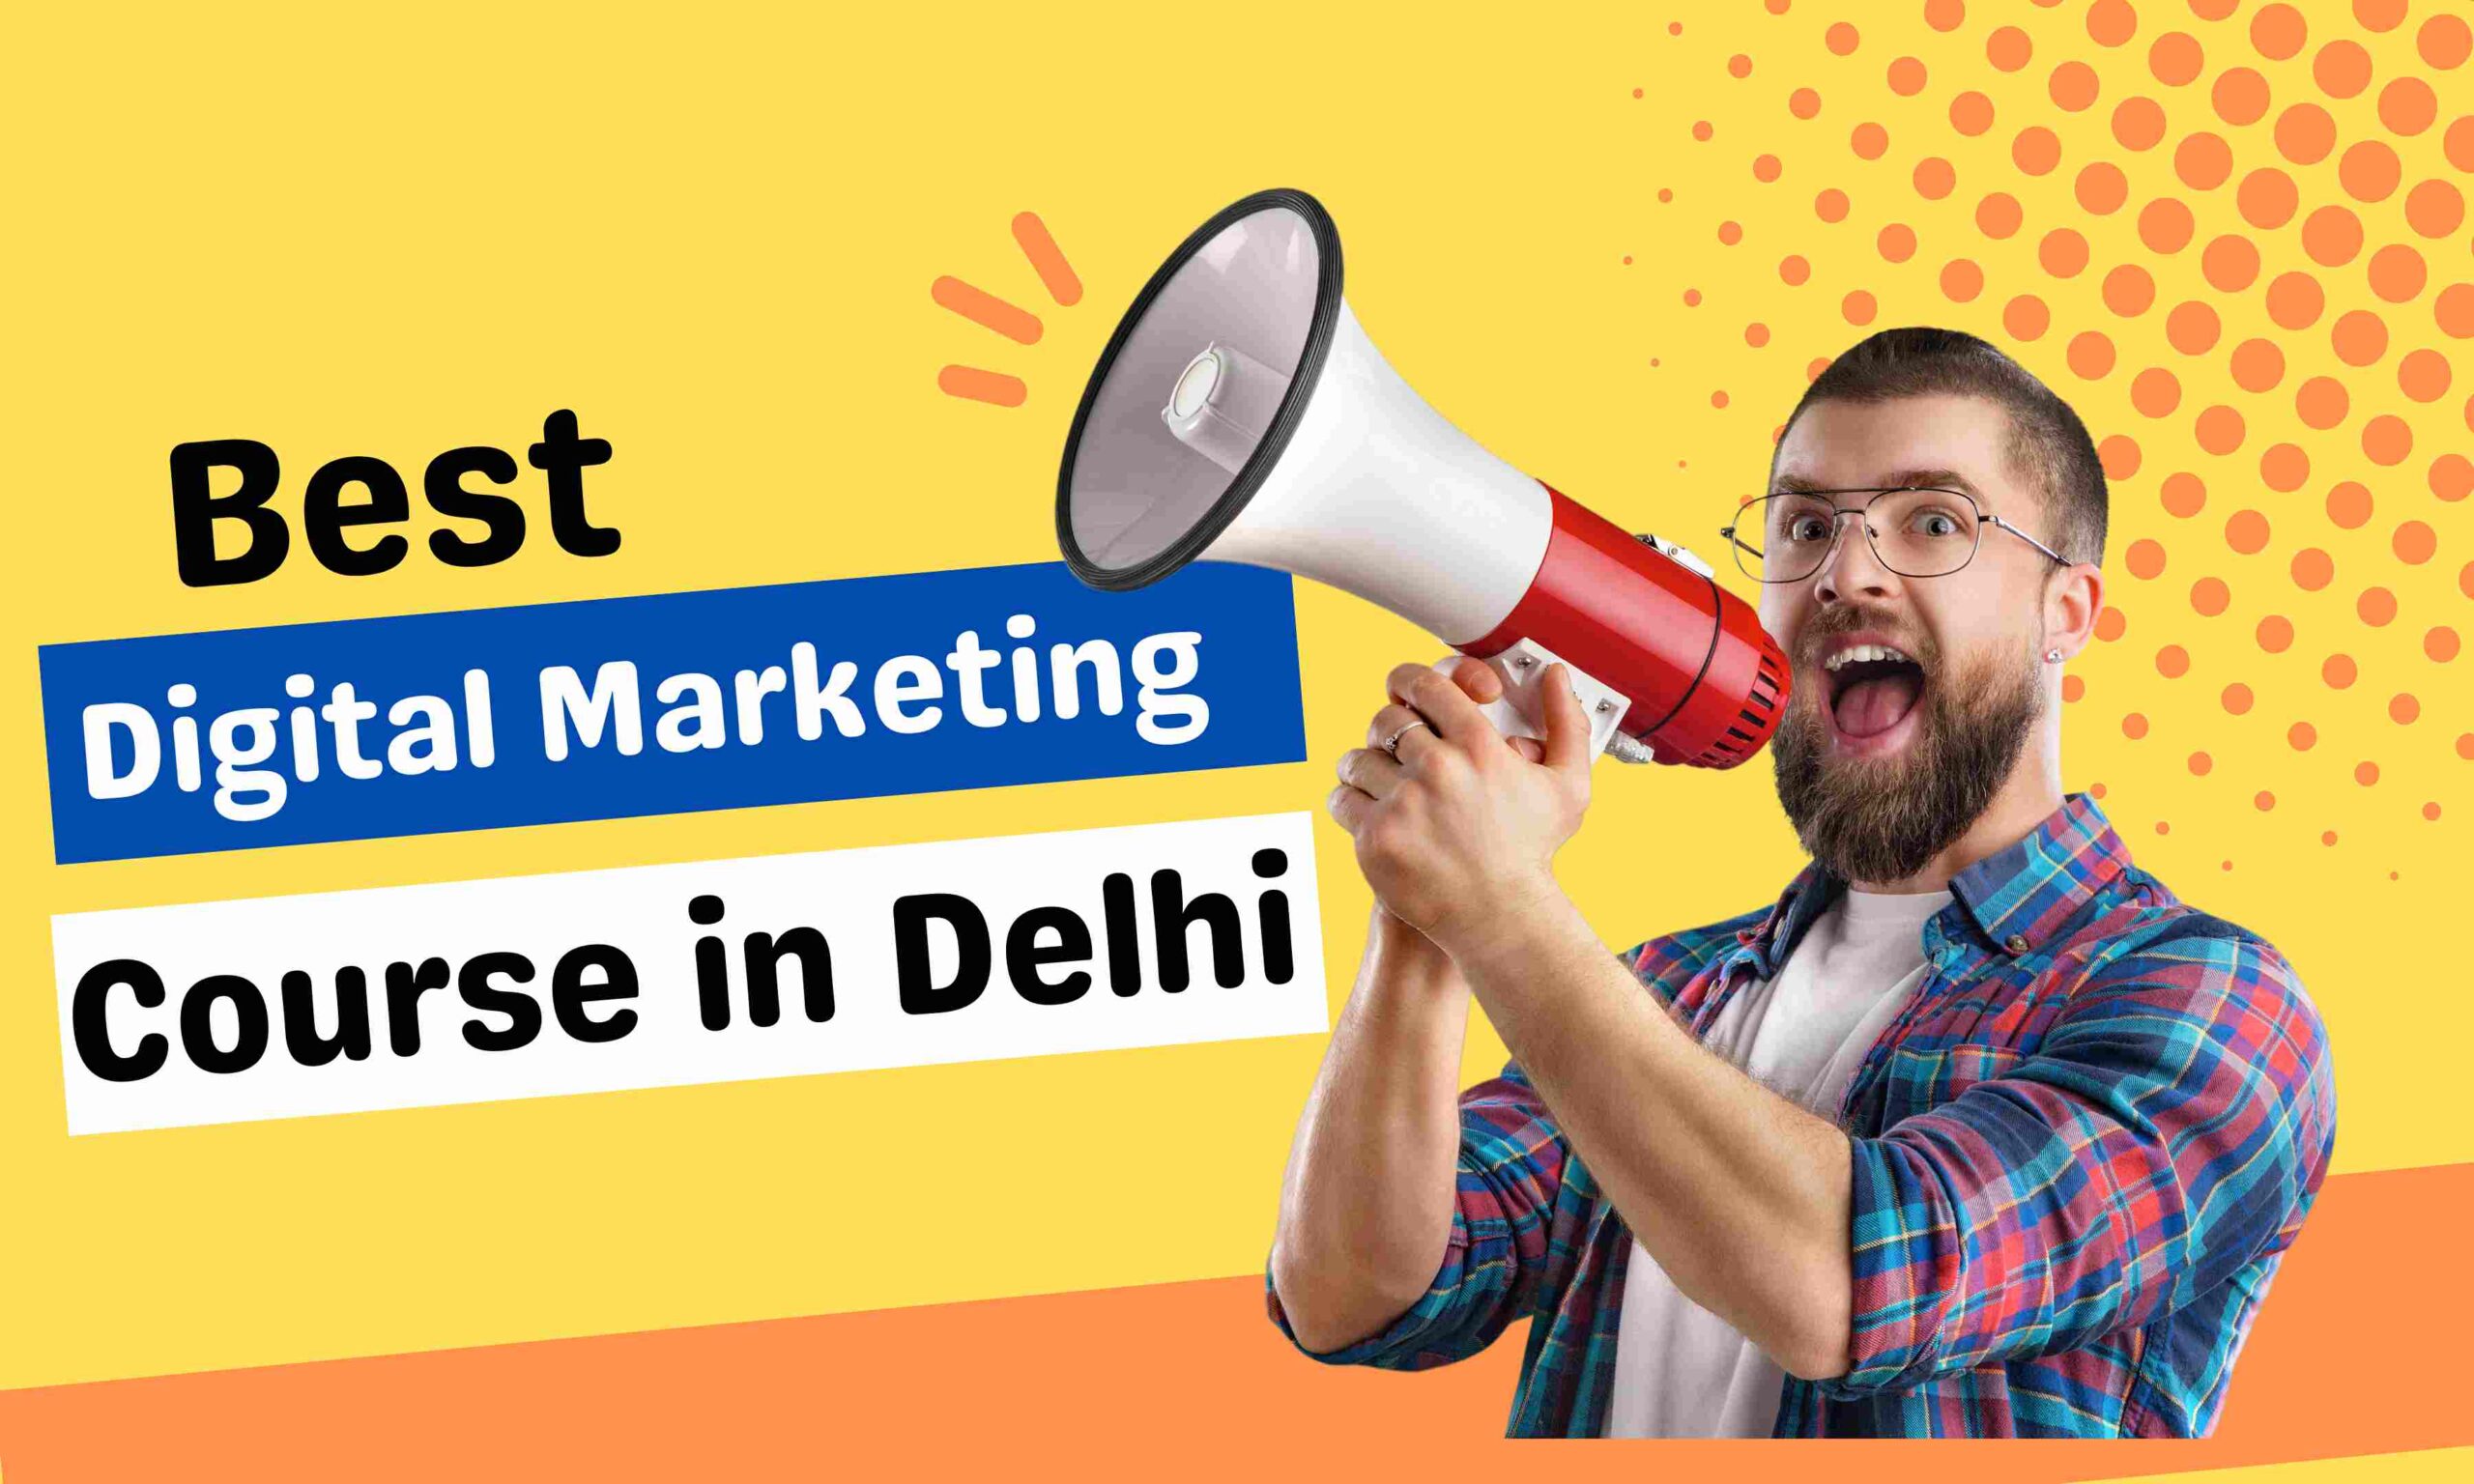 Best digital marketing courses in delhi